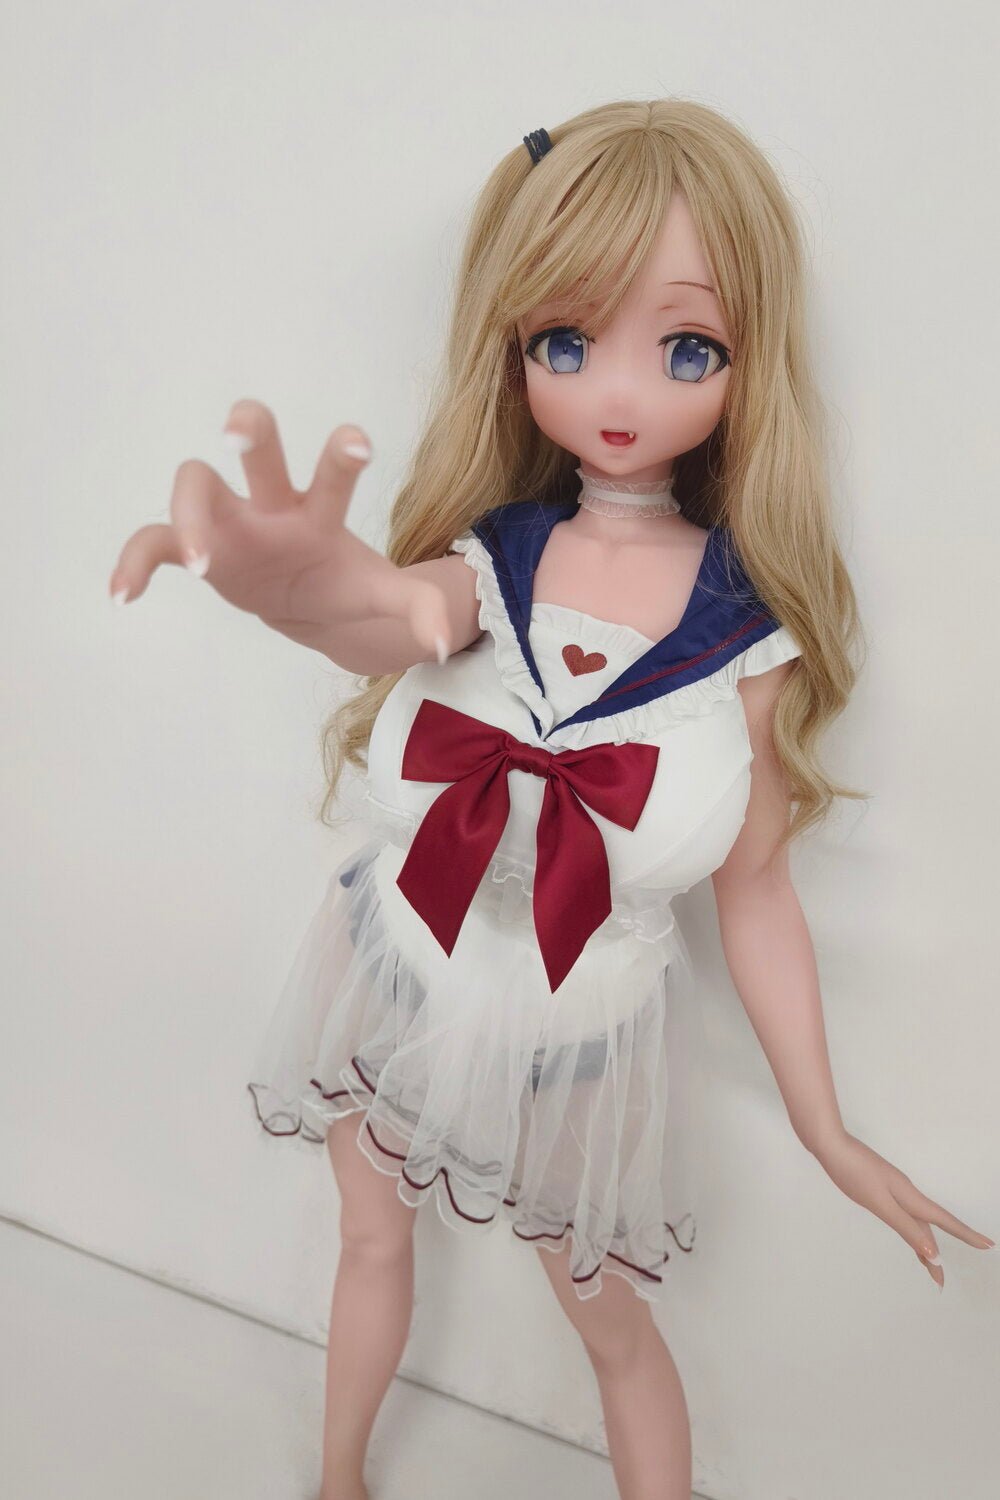 Elsababe 148cm/4ft10 Silicone Sex Doll – Haneda Nanako - Dolls inlove